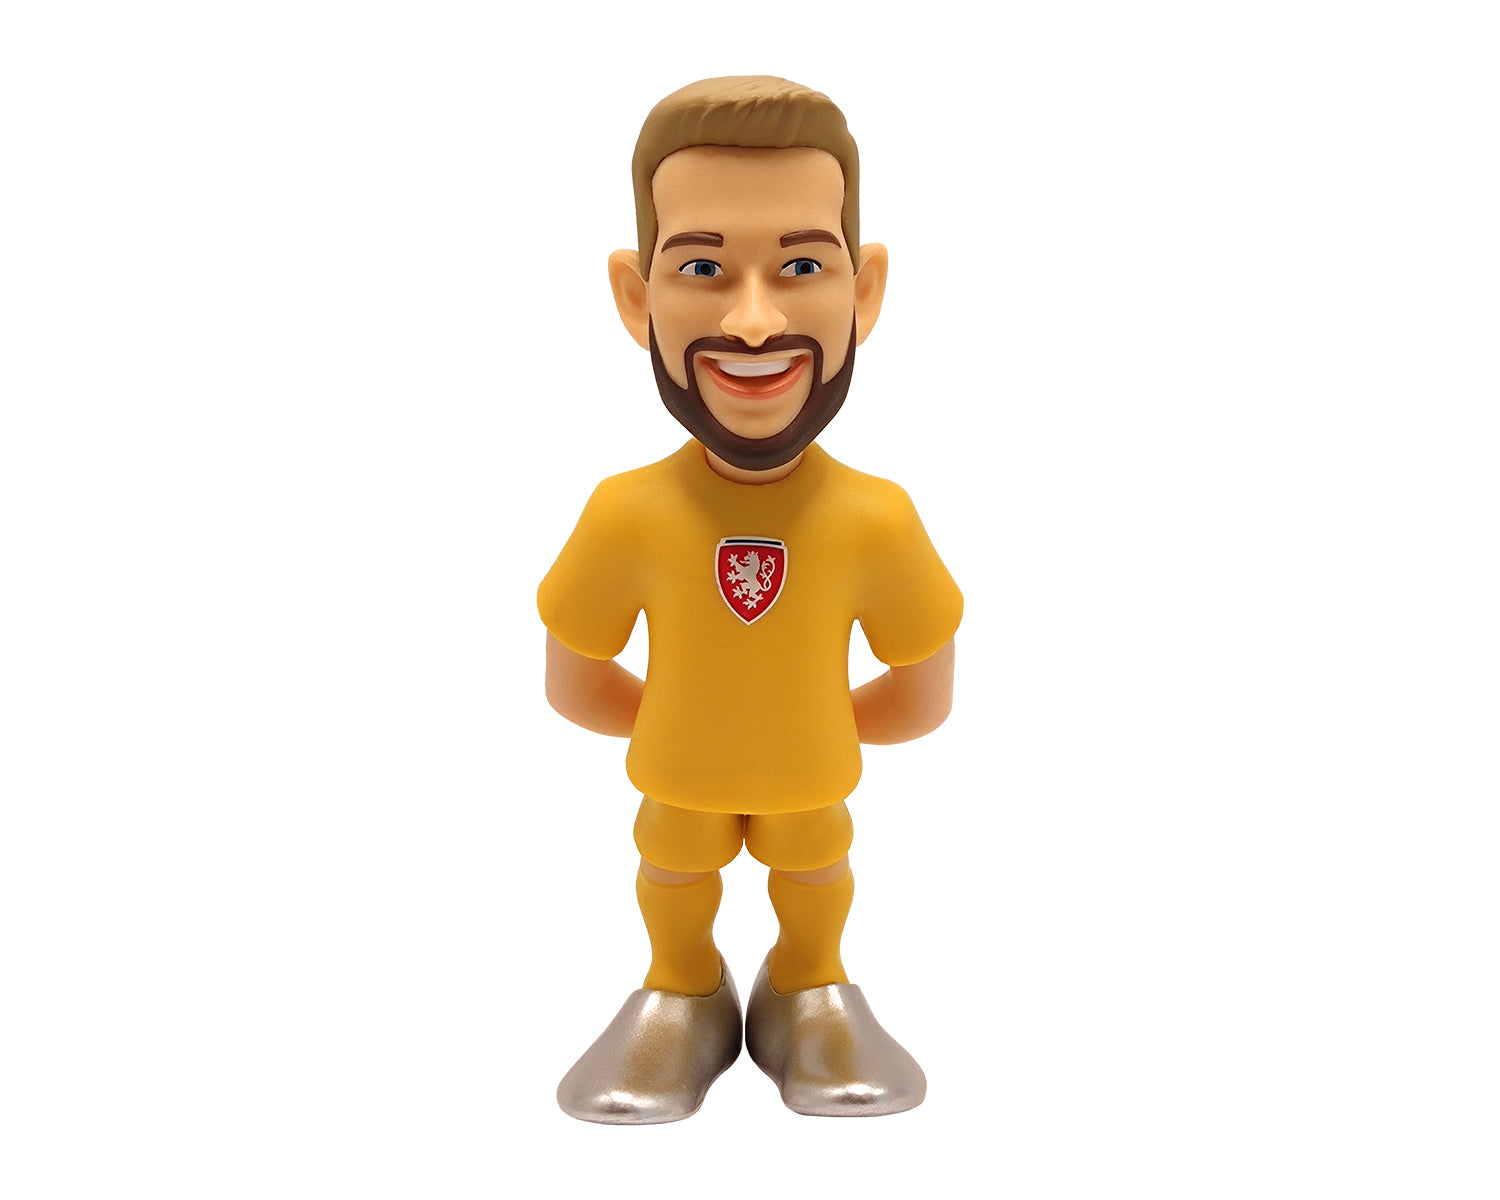 Minix -Football -CZ -VACLÍK -Figurine -12 cm